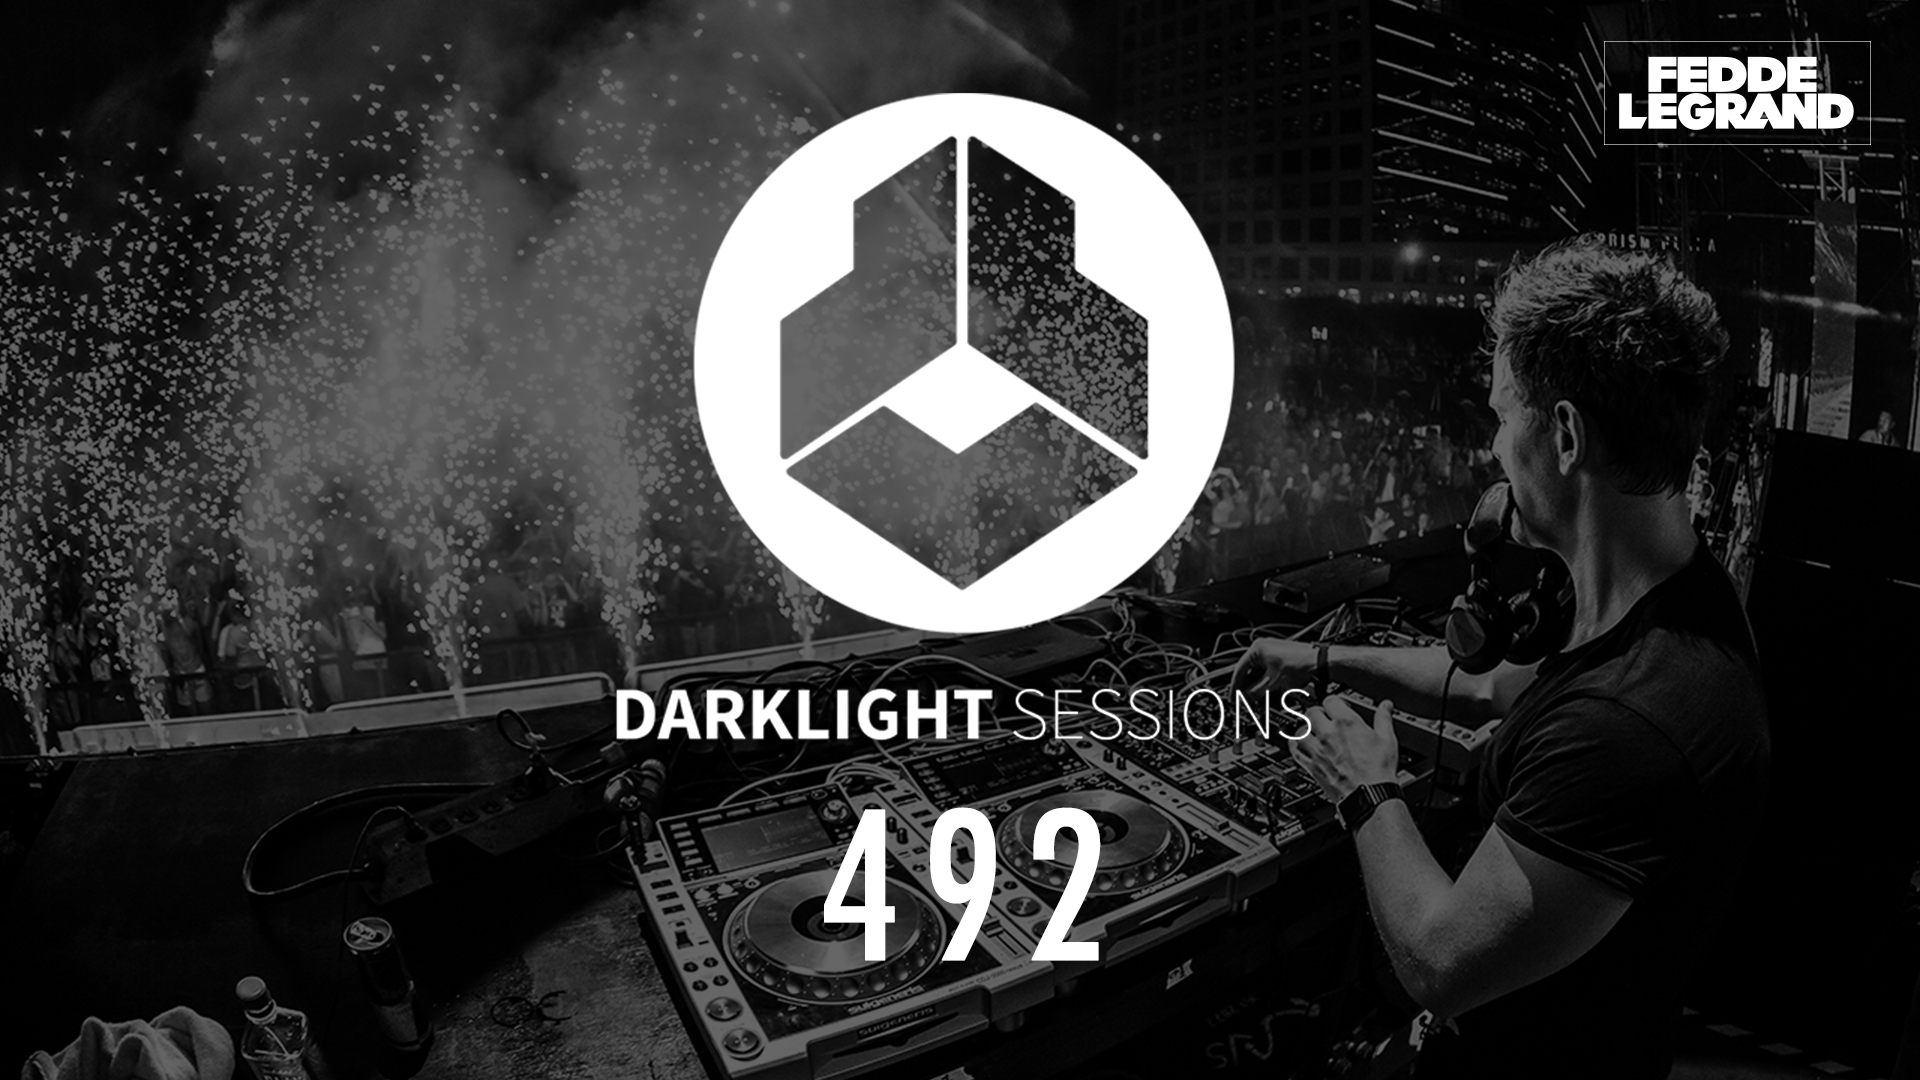 Darklight Sessions 492